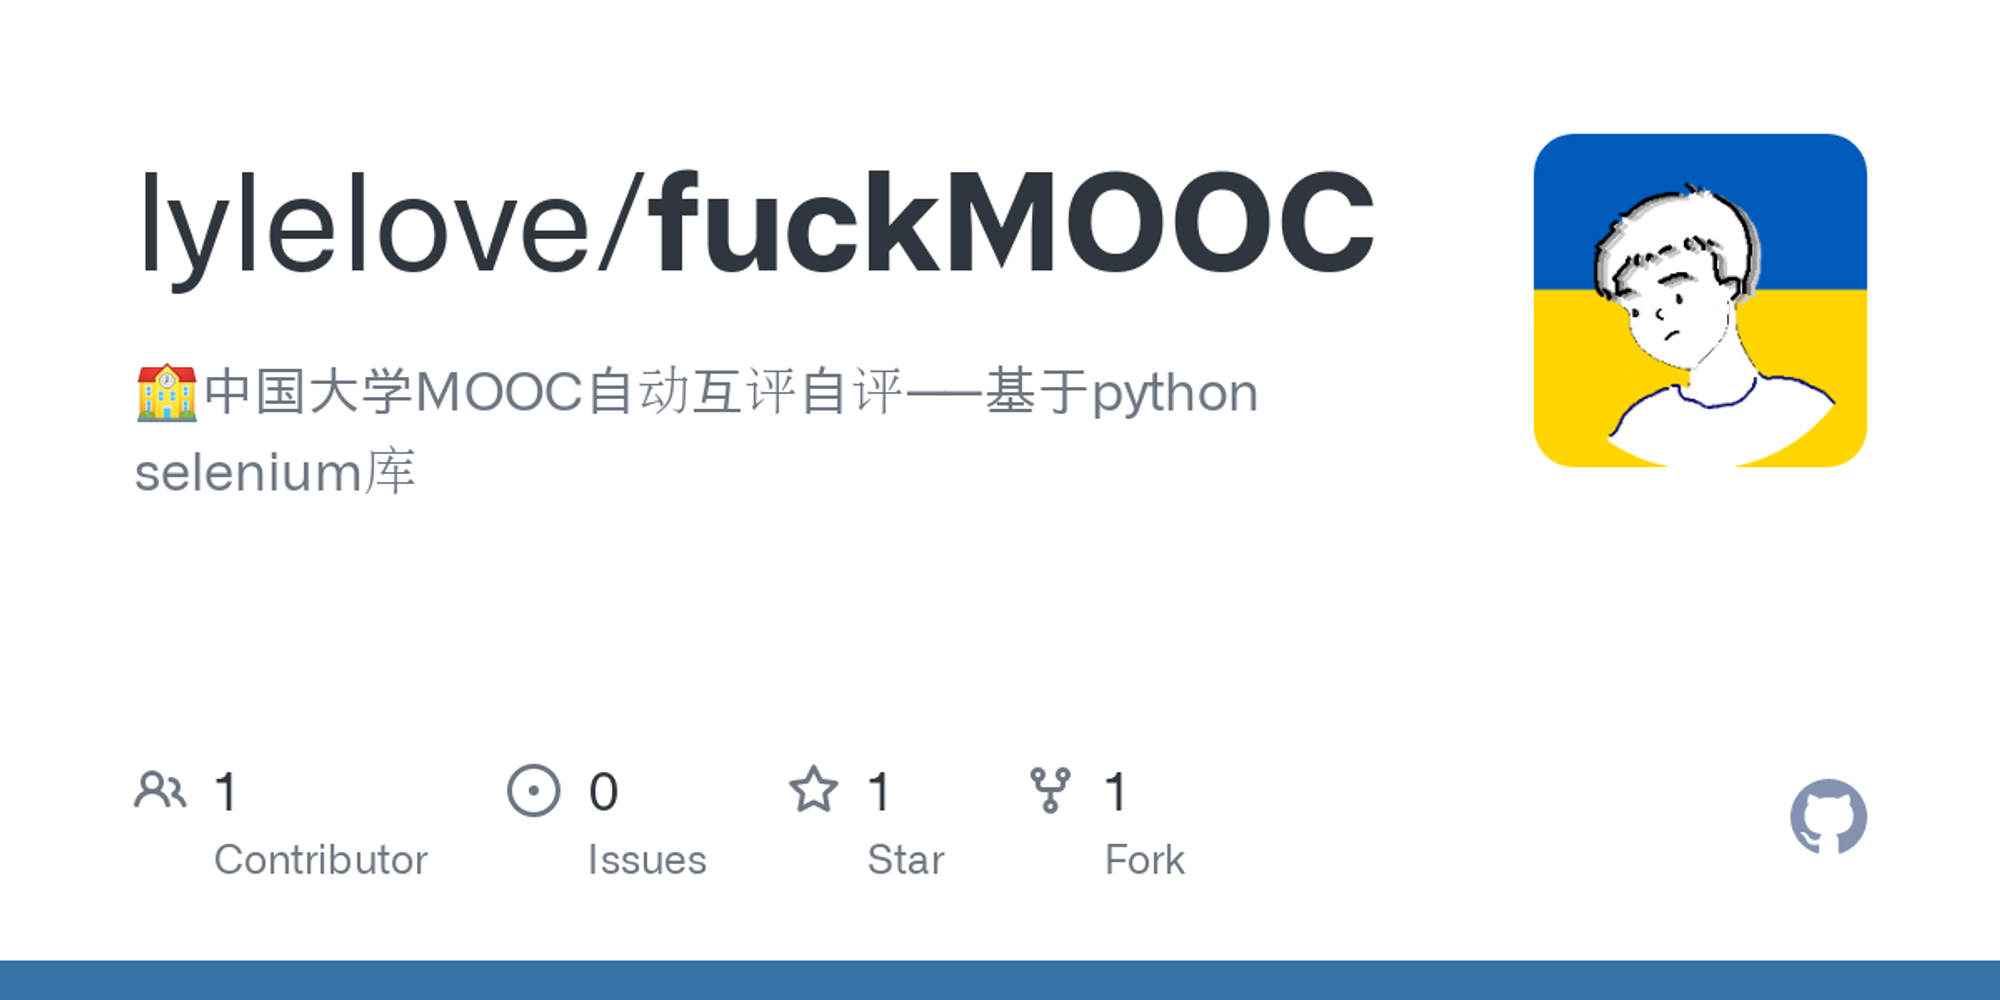 GitHub - lylelove/fuckMOOC: 🏫中国大学MOOC自动互评自评--基于python selenium库